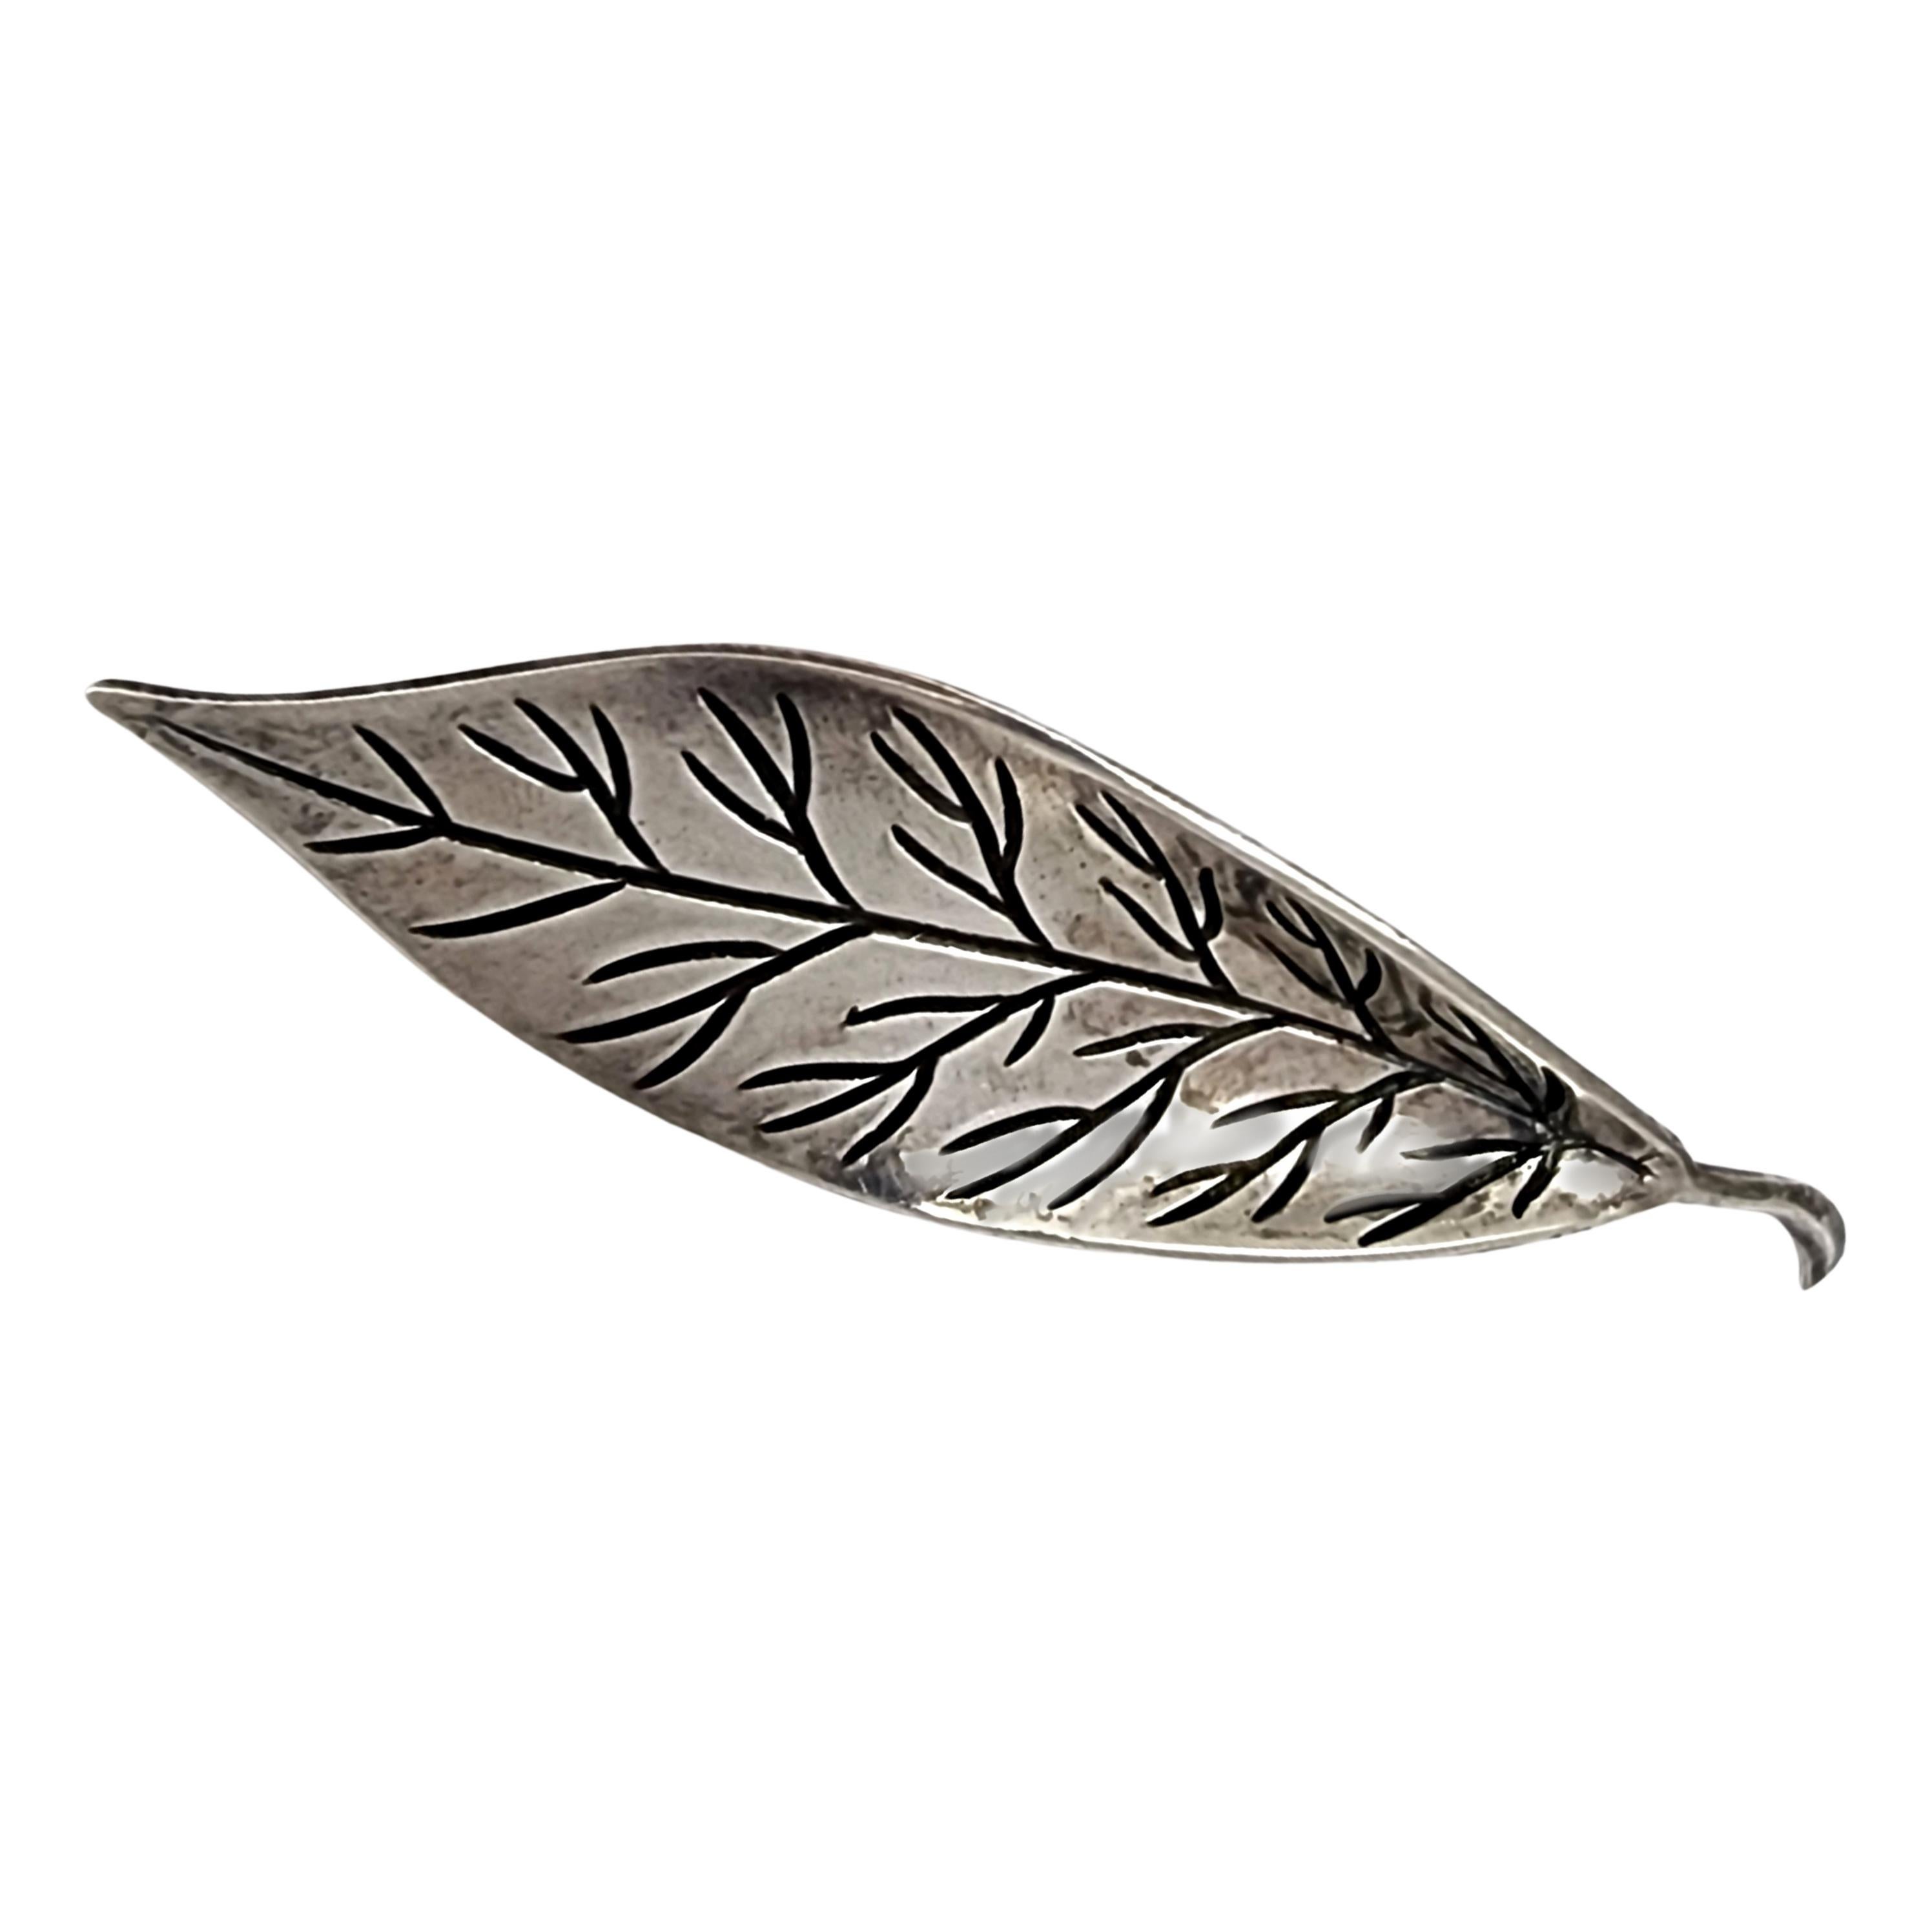 Women's David Andersen Norway Sterling Silver Leaf Pin/Brooch #14188 For Sale